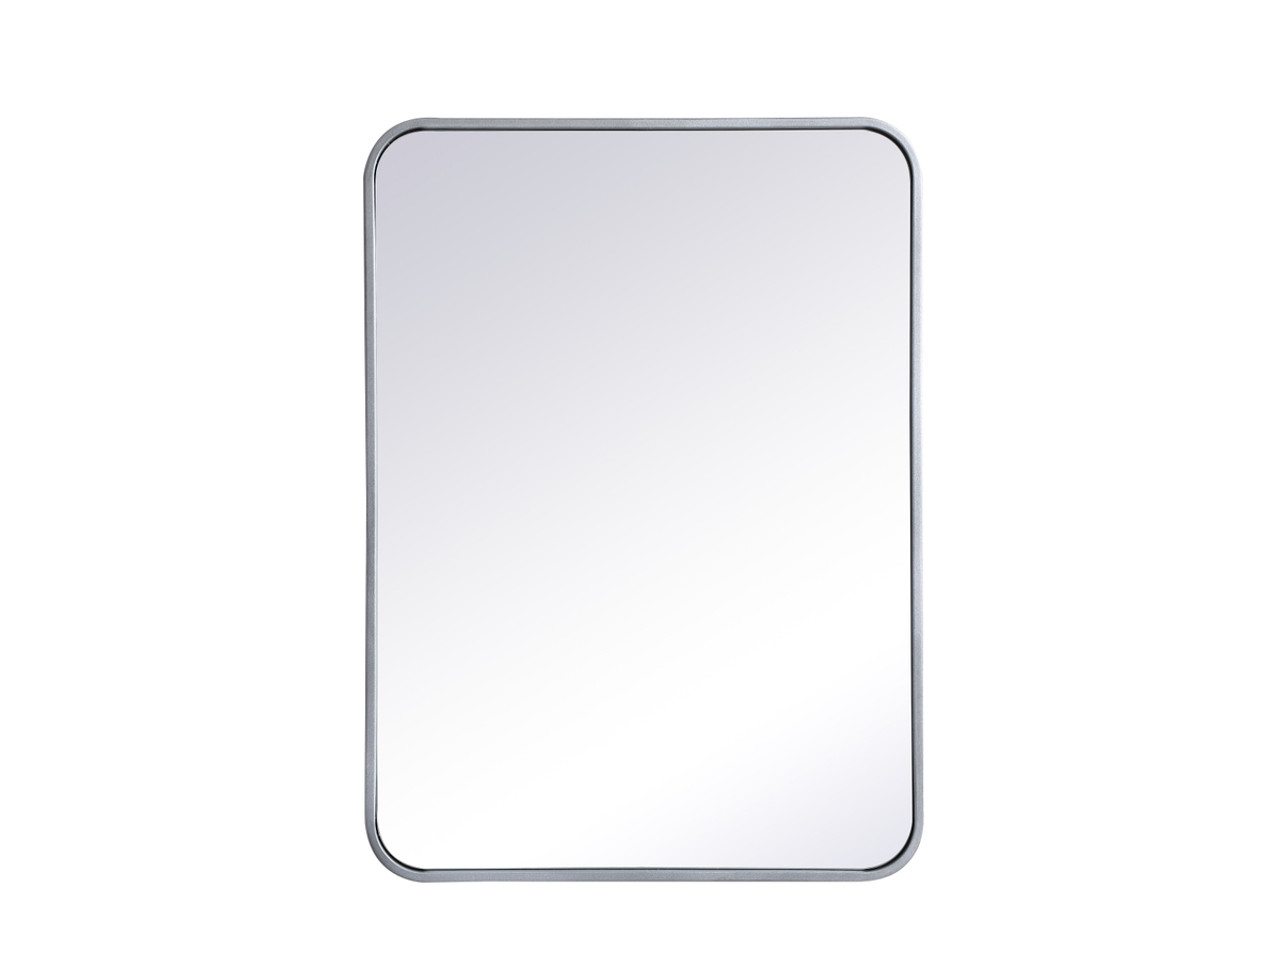 Elegant Decor MR802230S Soft corner metal rectangular mirror 22x30 inch in Silver